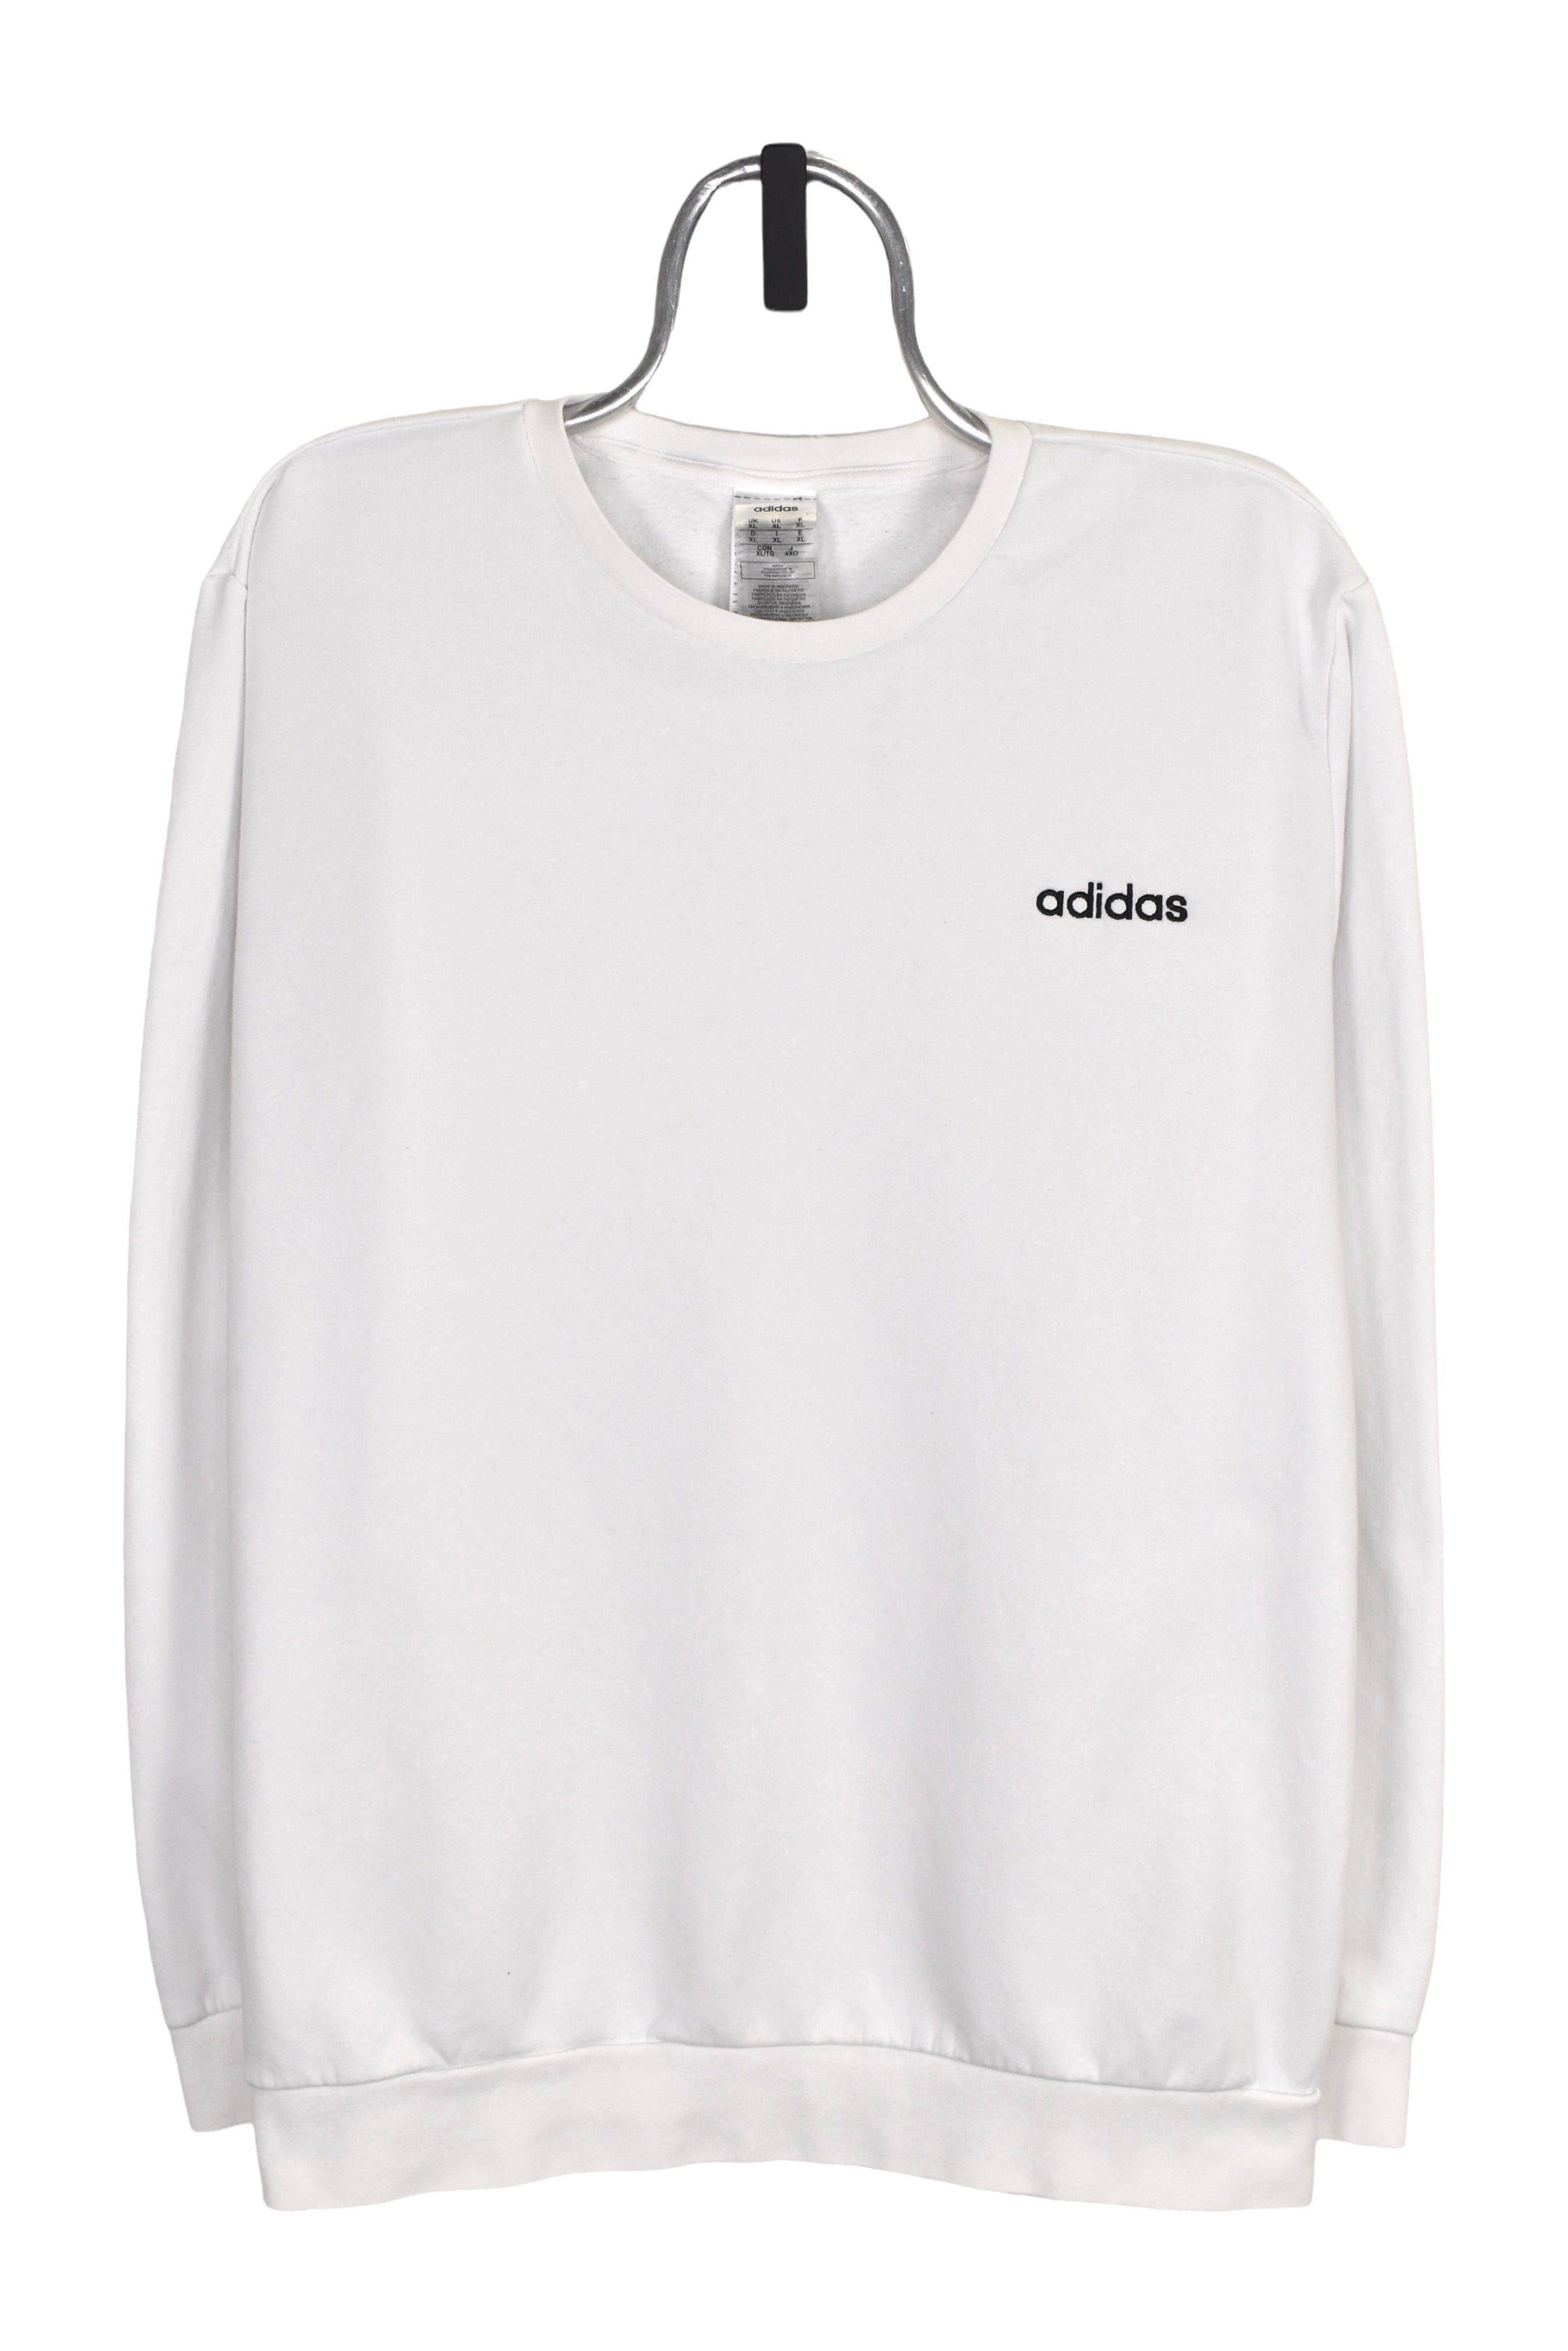 Modern Adidas sweatshirt (XL), white embroidered crewneck